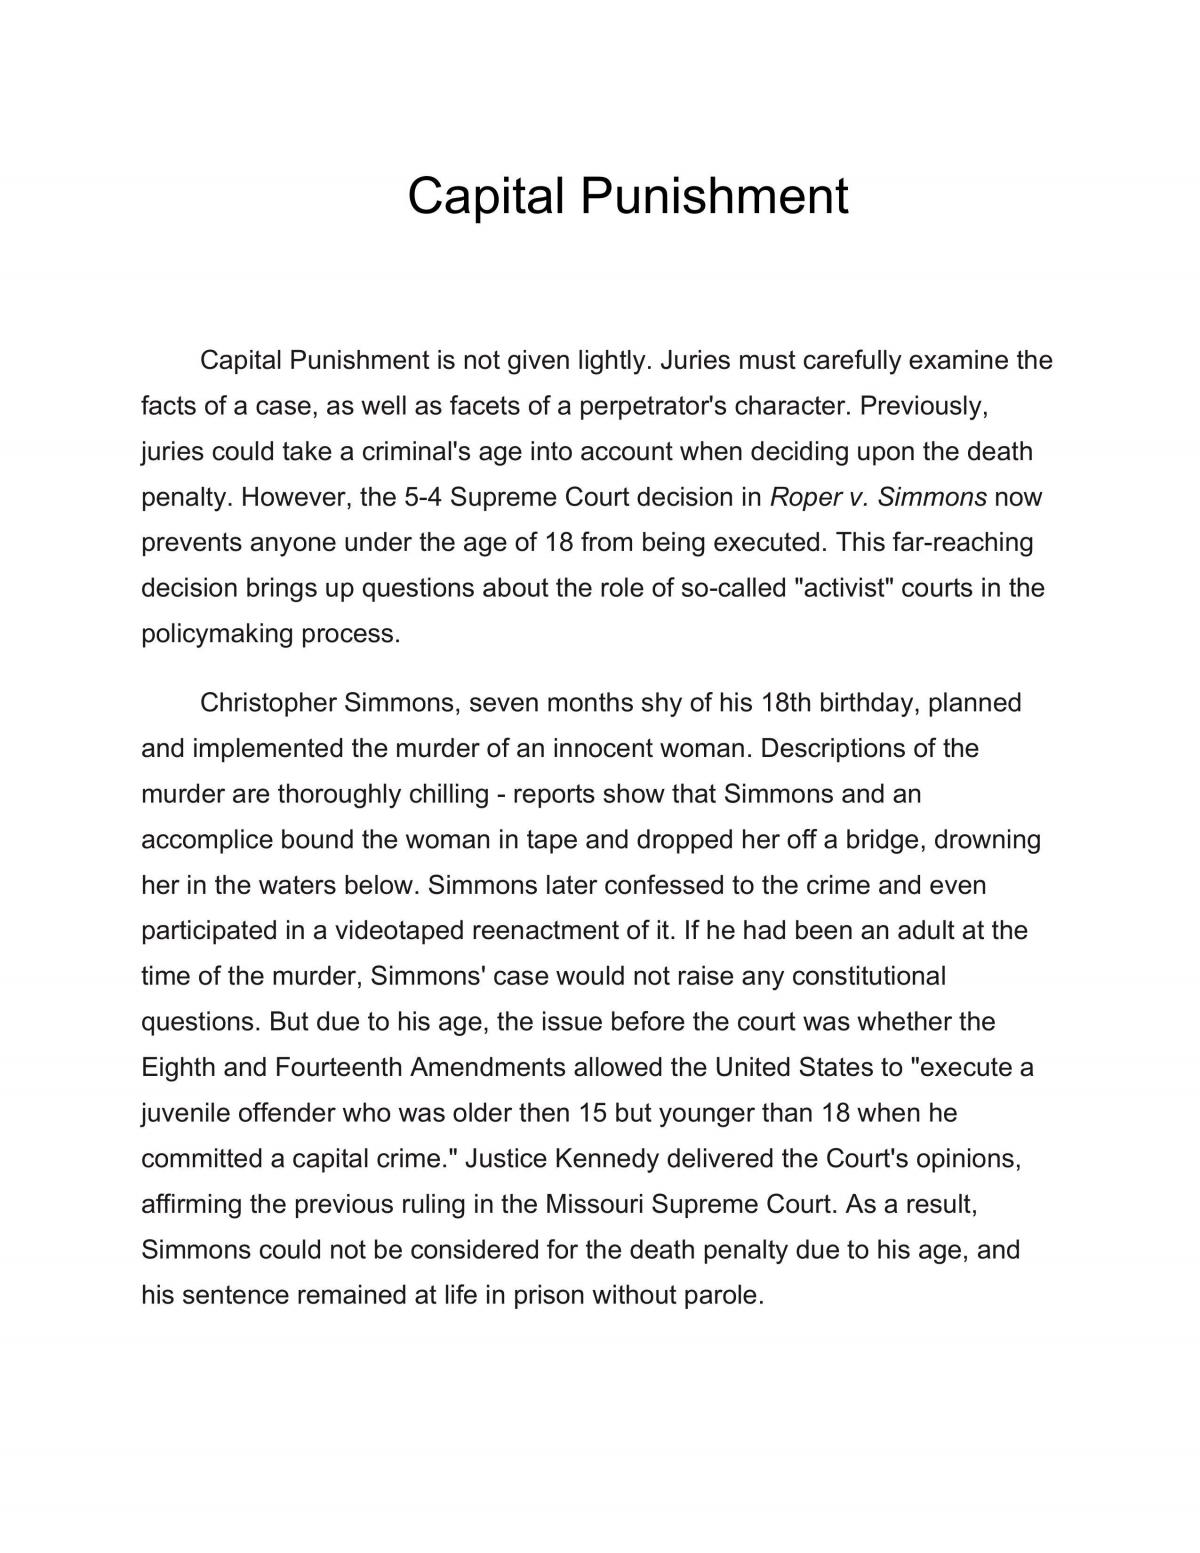 conclusion of capital punishment essay